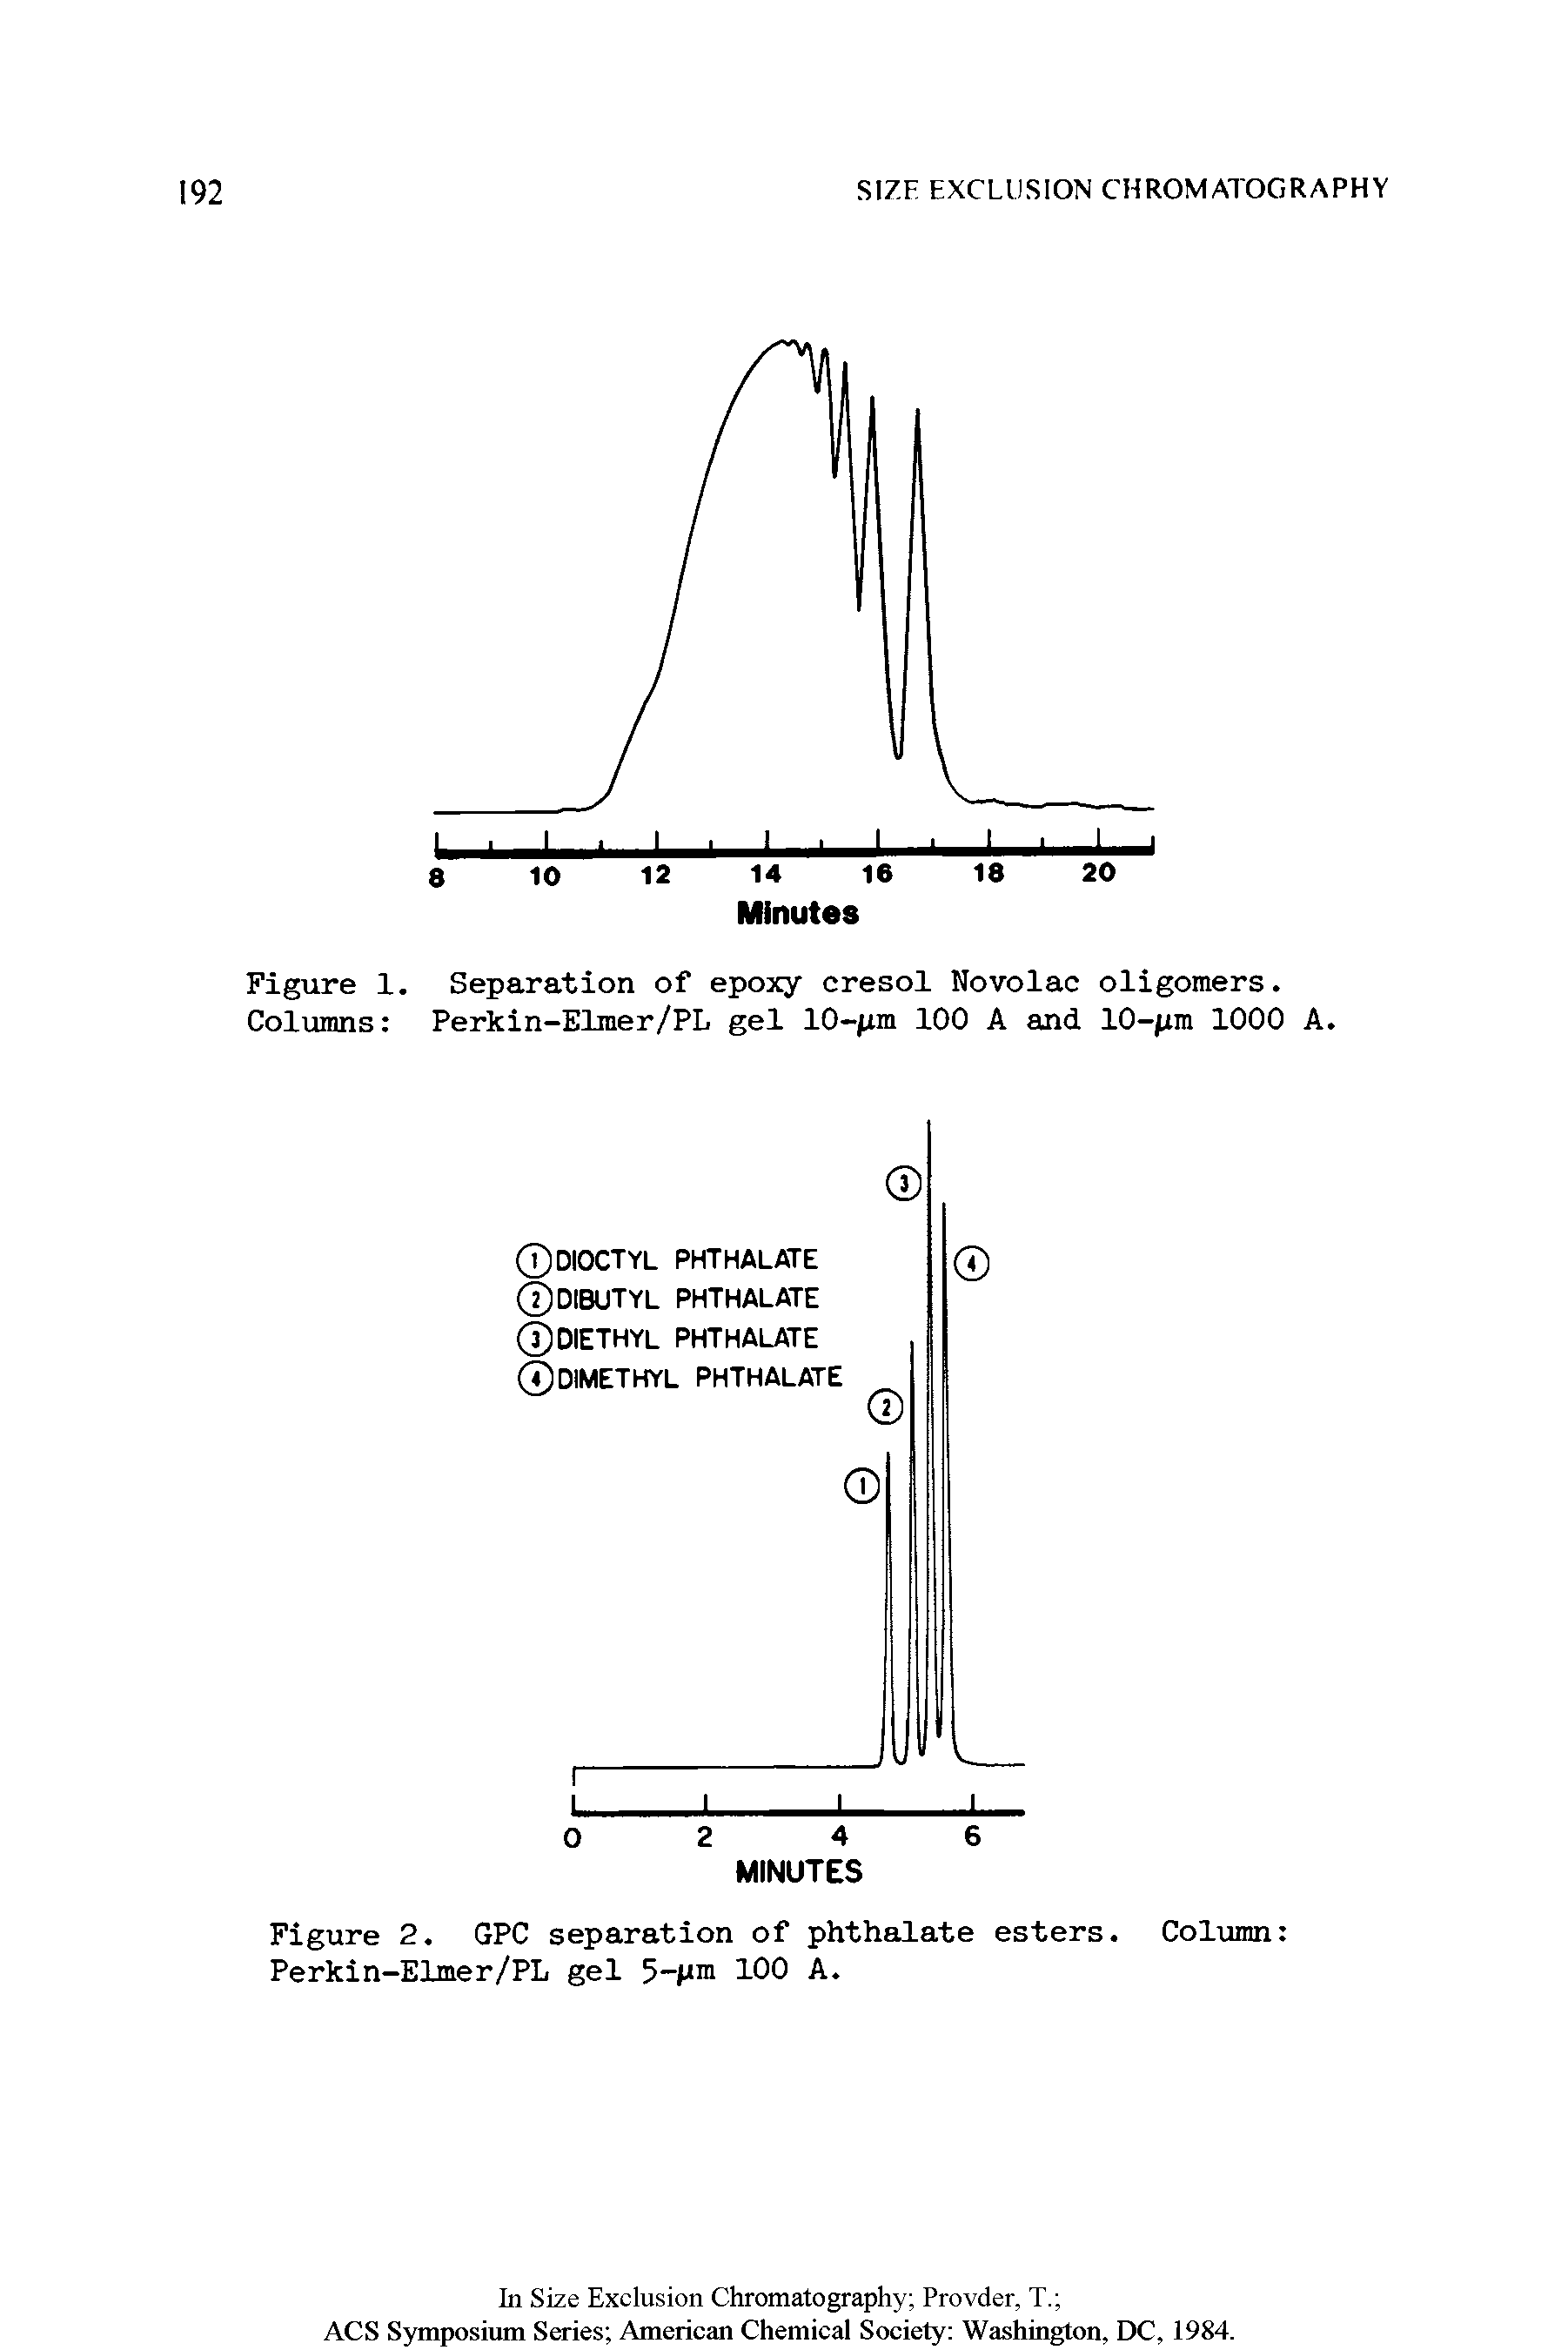 Figure 1. Separation of epoxy cresol Novolac oligomers. Columns Perkin-Elmer/PL gel 10-fim 100 A and 10-pm 1000 A.